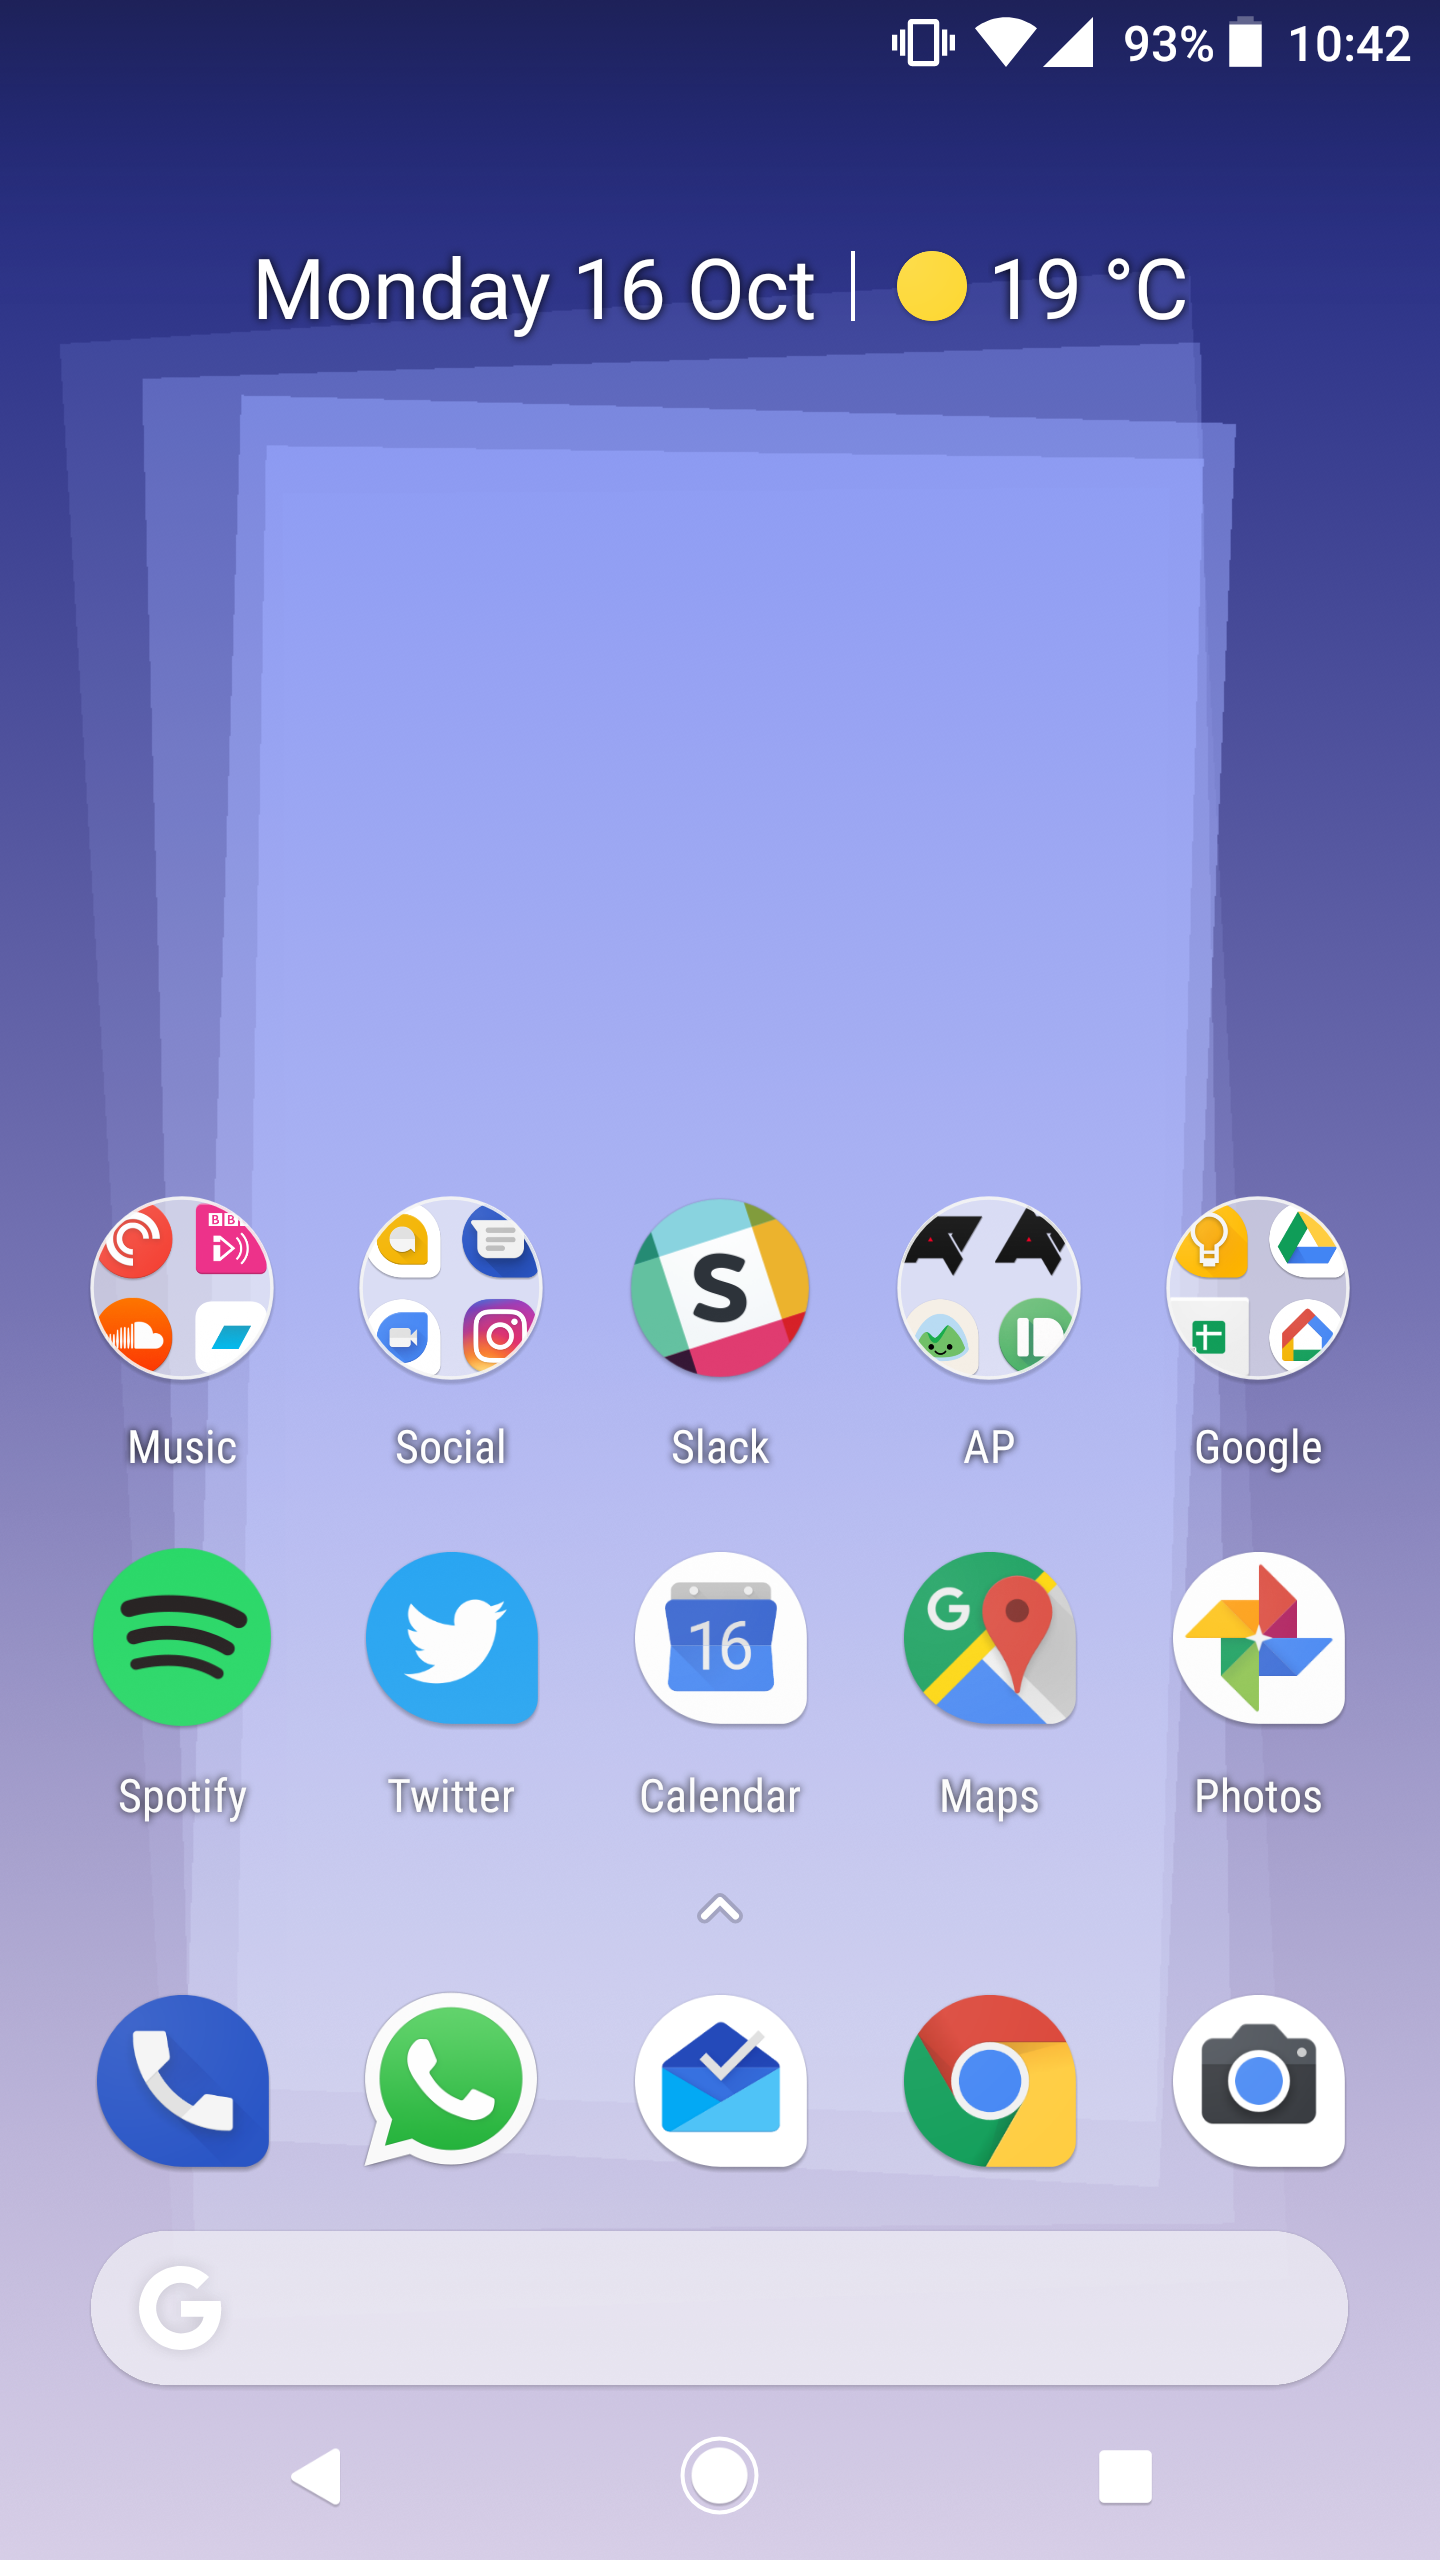 Xiaomi Mi A1 Price In India - HD Wallpaper 